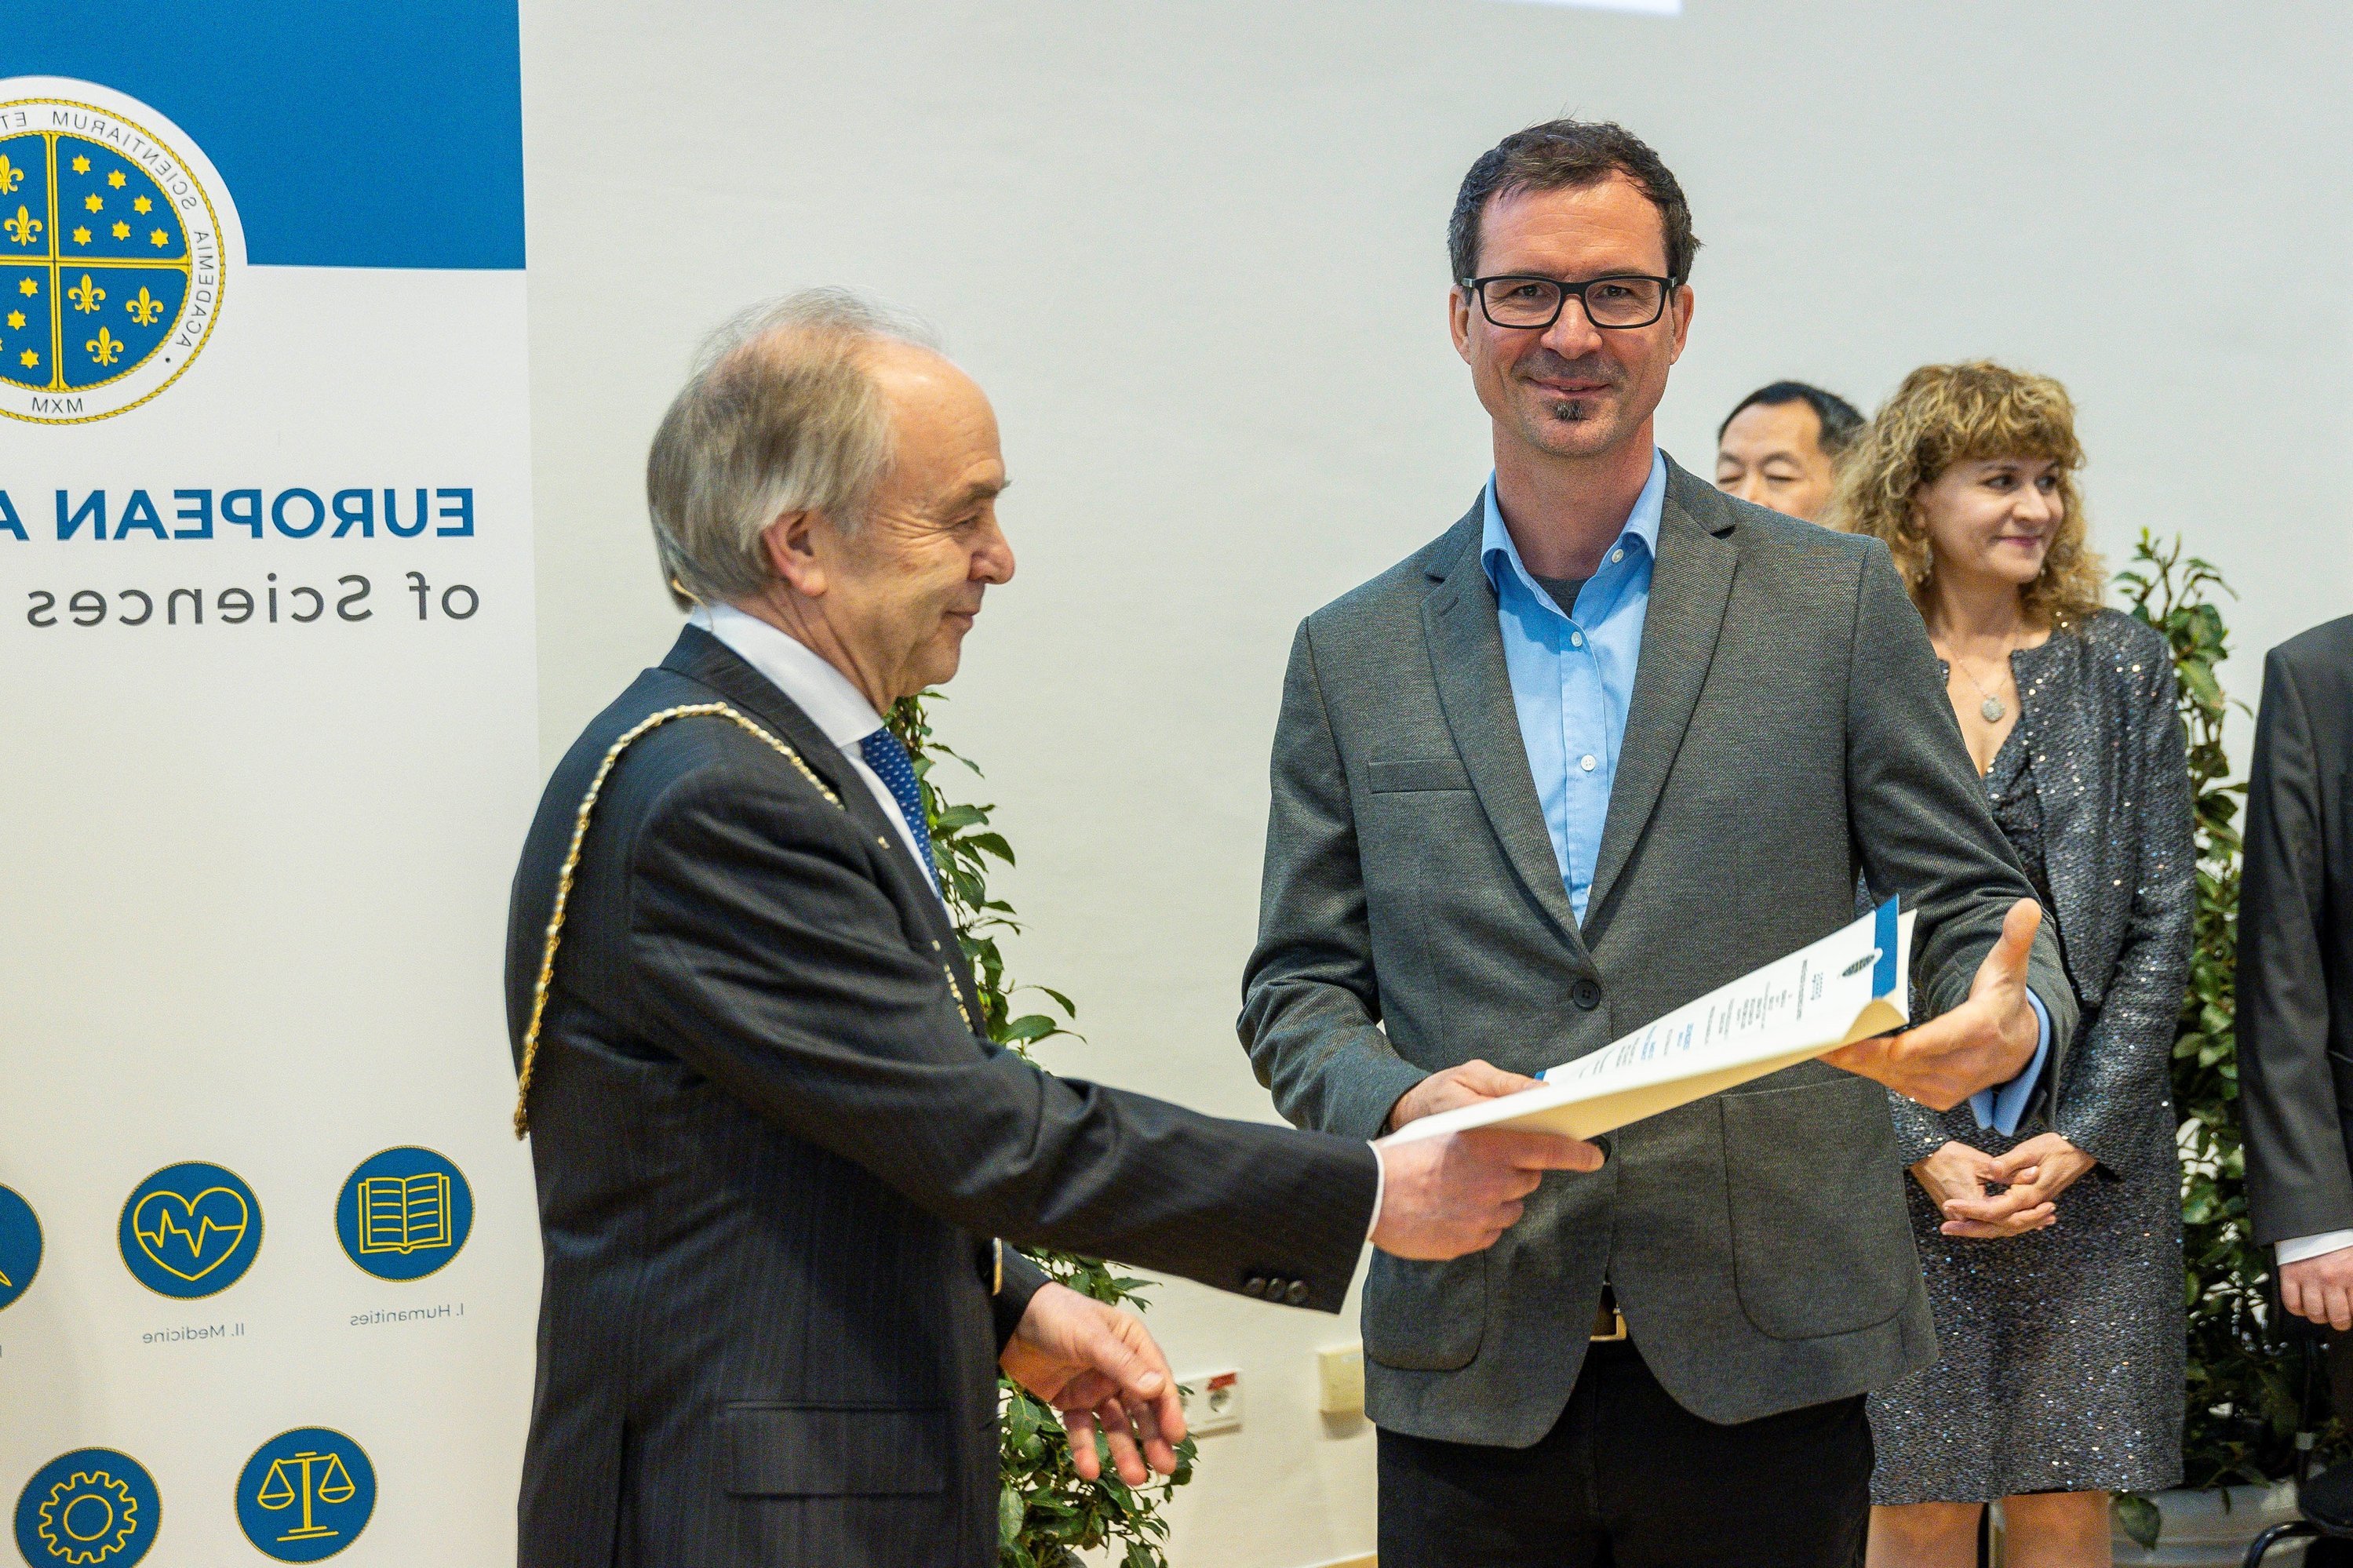 Jürgen Kosel receiving his membership certificate for the European Academy of Science by an elder member